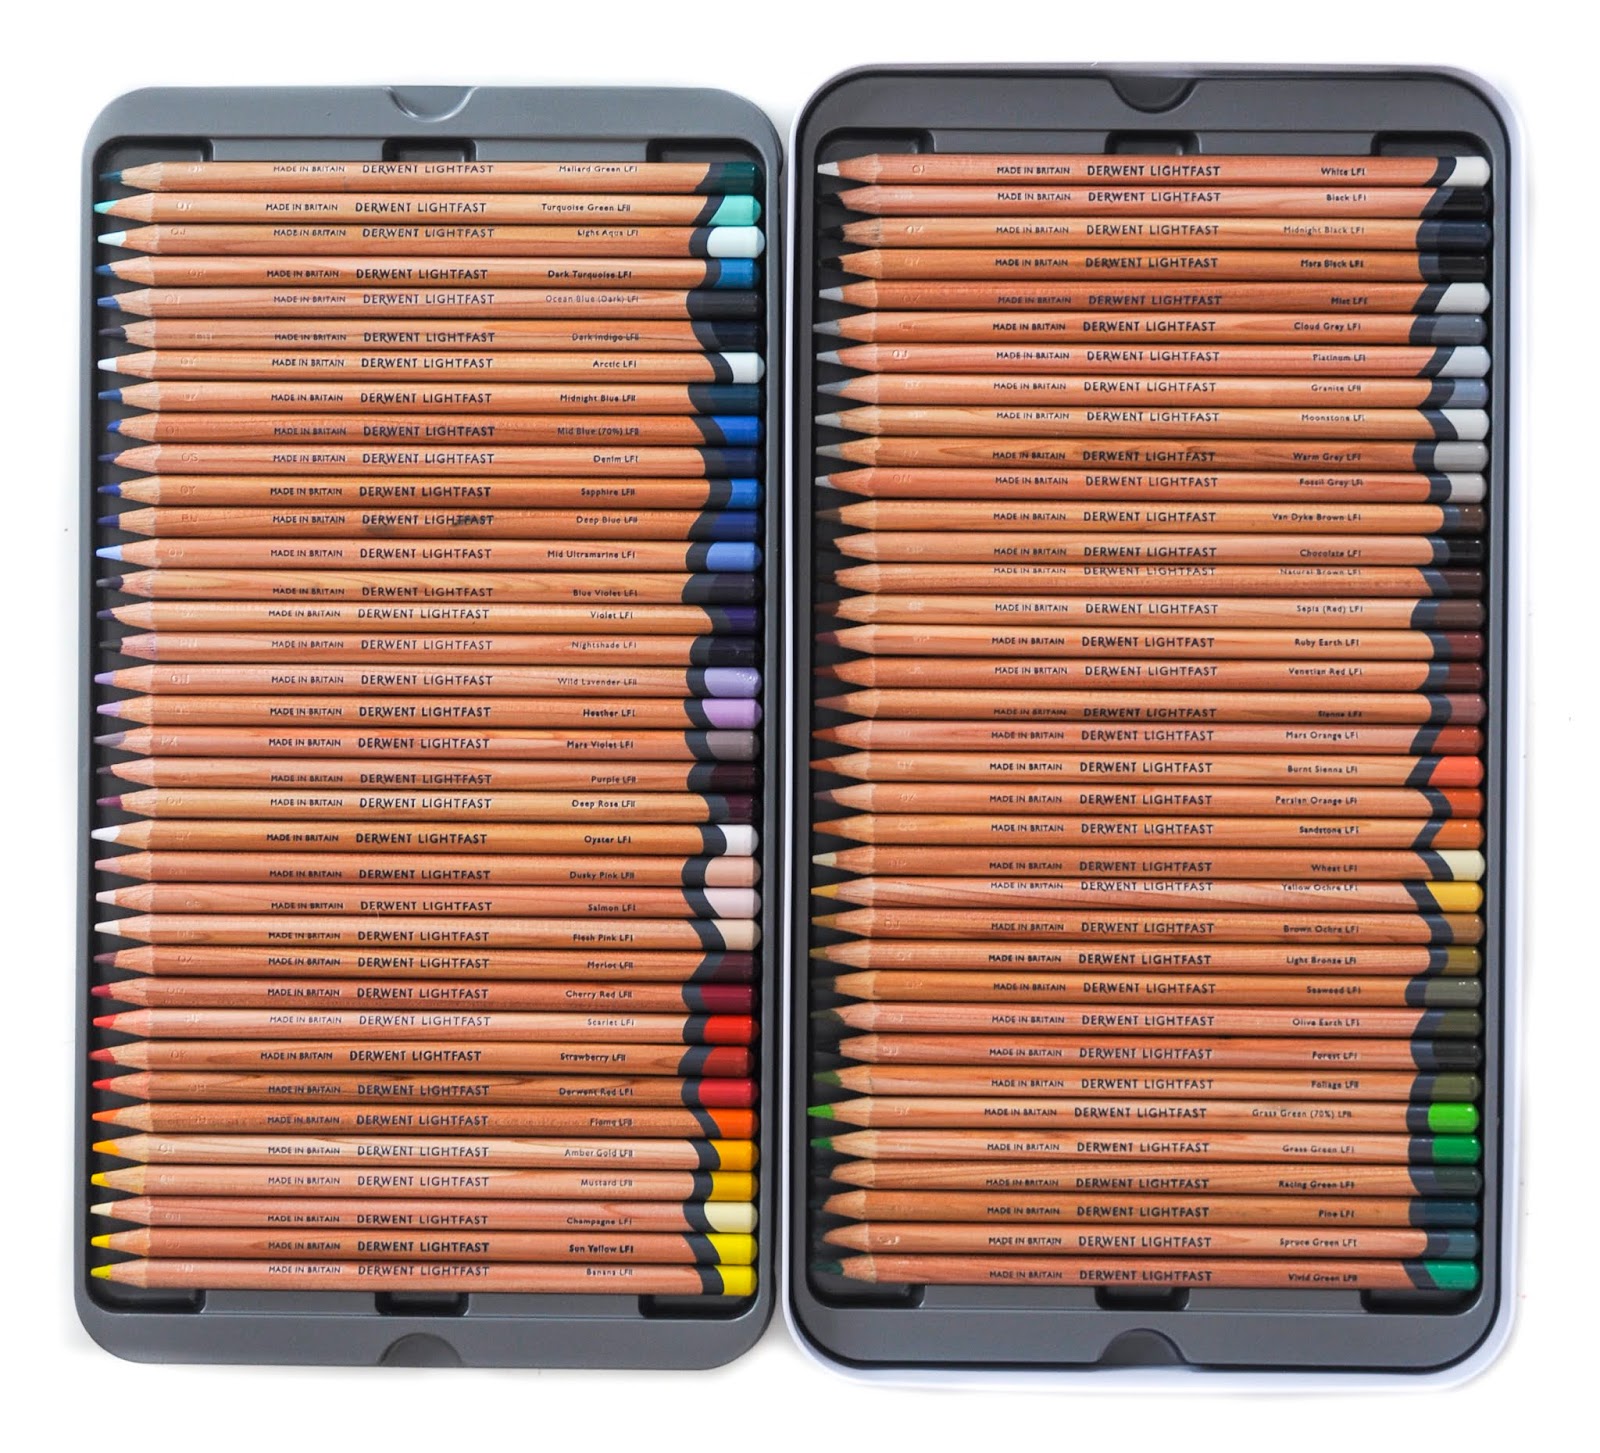 Derwent Lightfast Colored Pencil - Set of 72